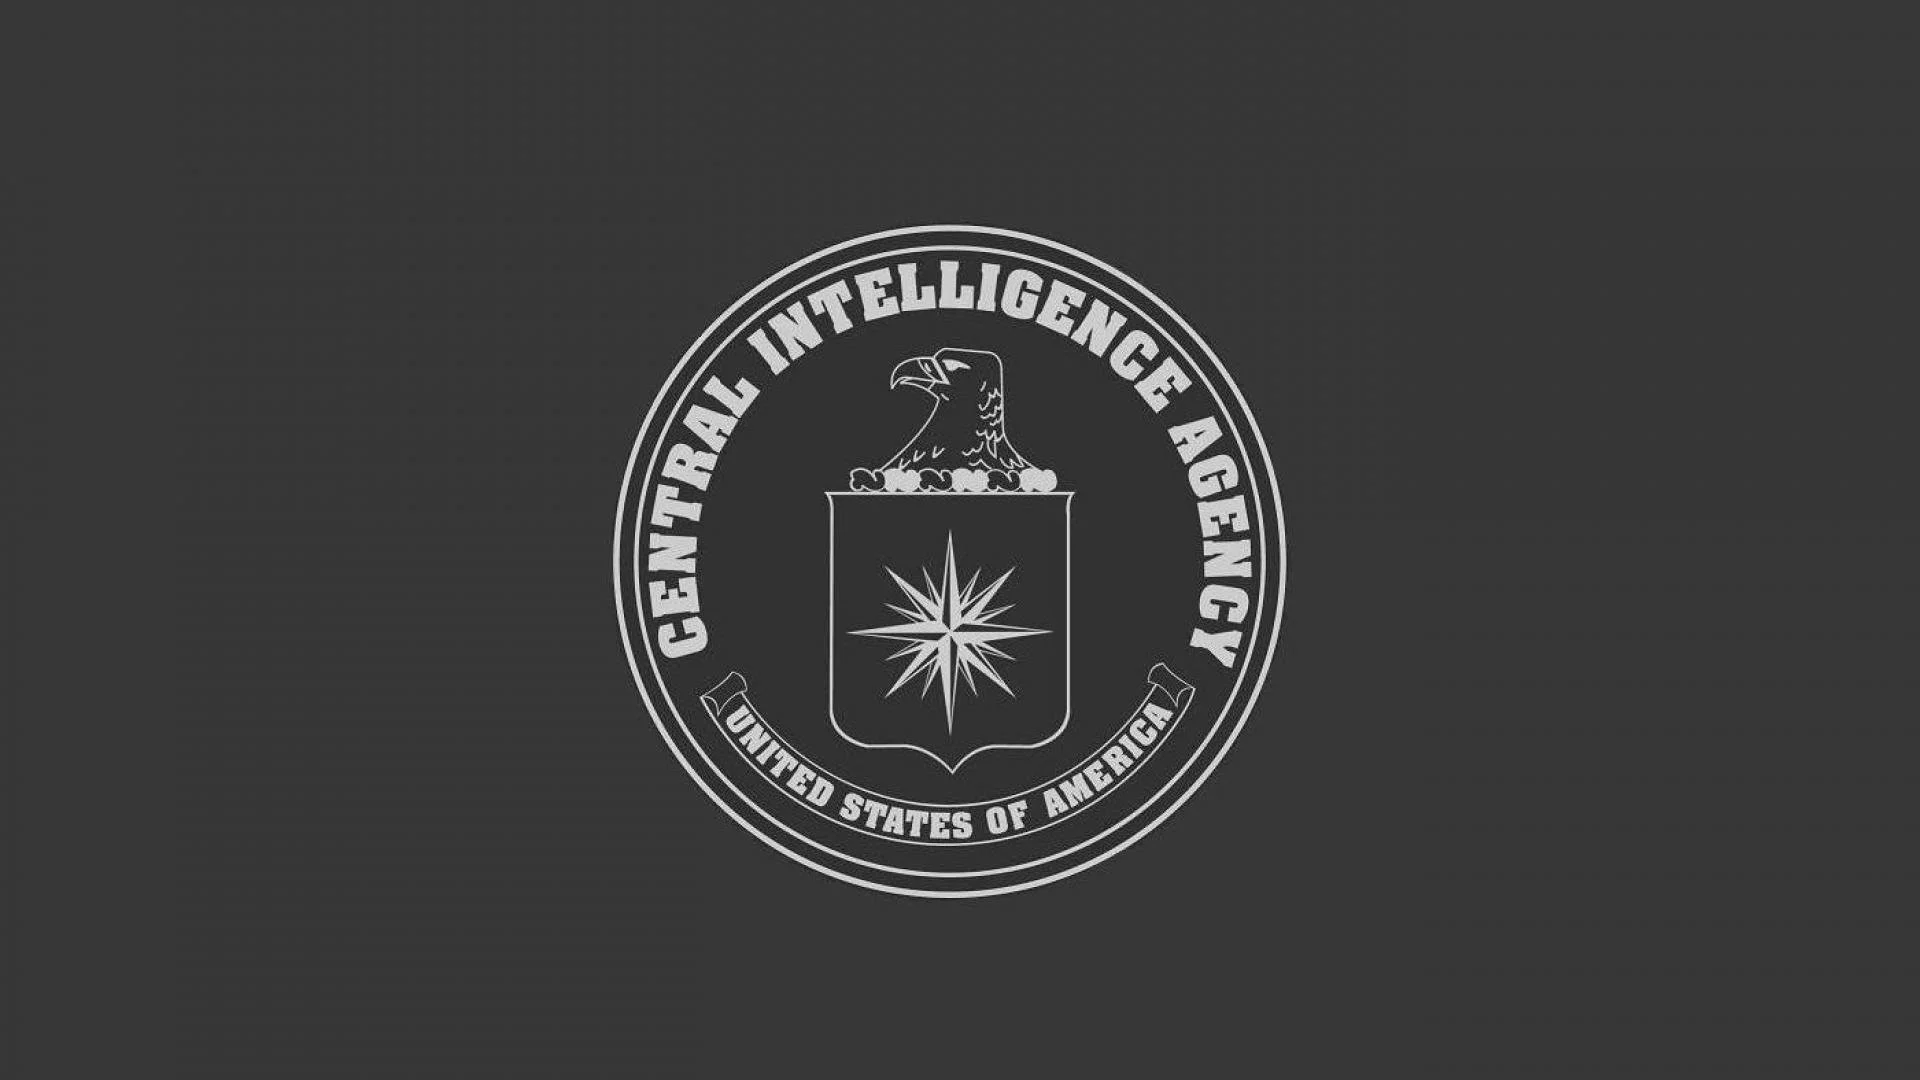 CIA Central Intelligence Agency crime usa america spy logo wallpaper 421676 WallpaperUP